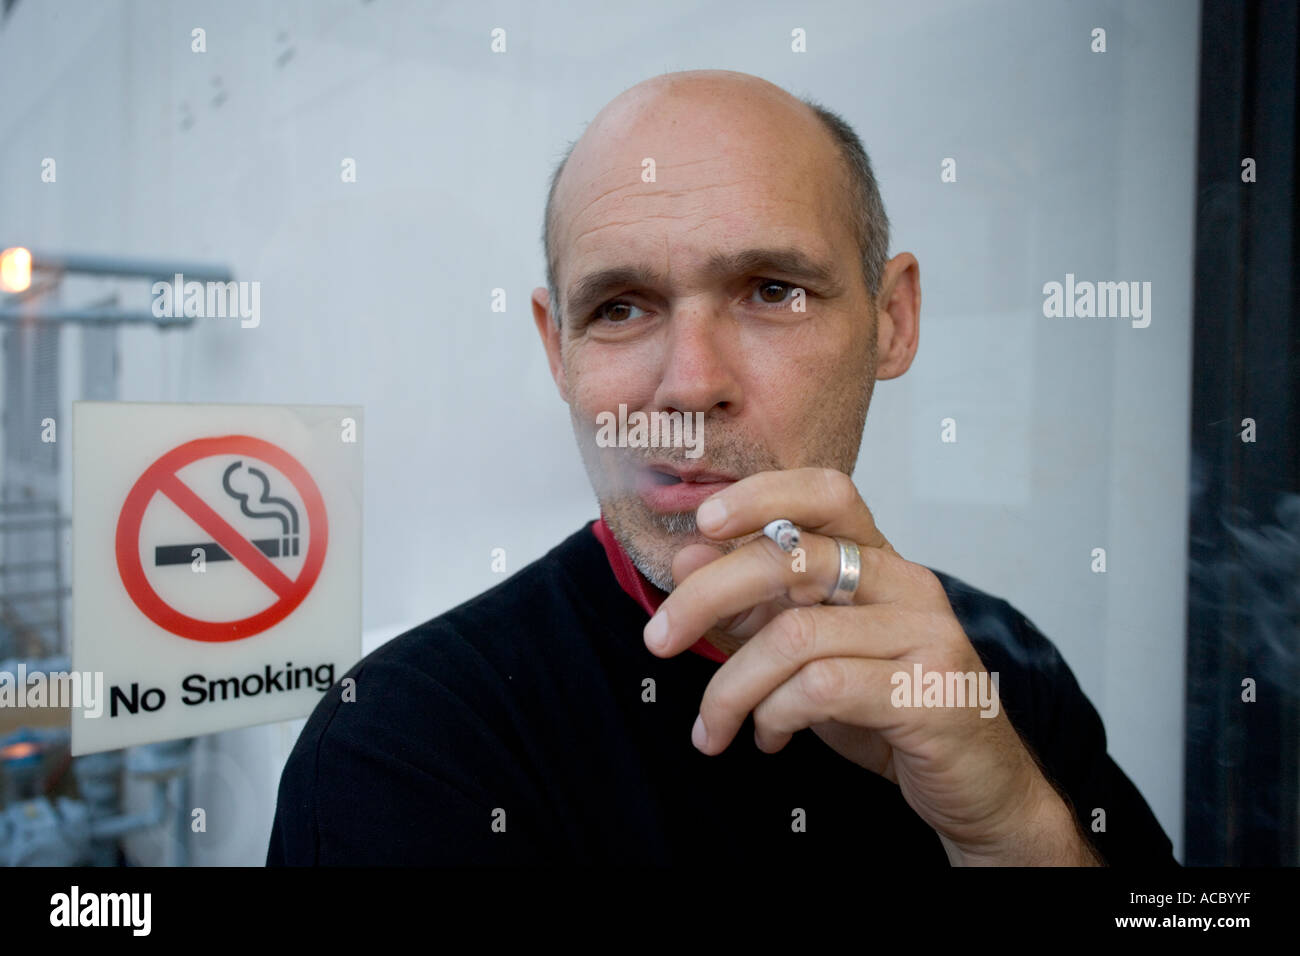 Man smoke in front of non smoking sign Stock Photo